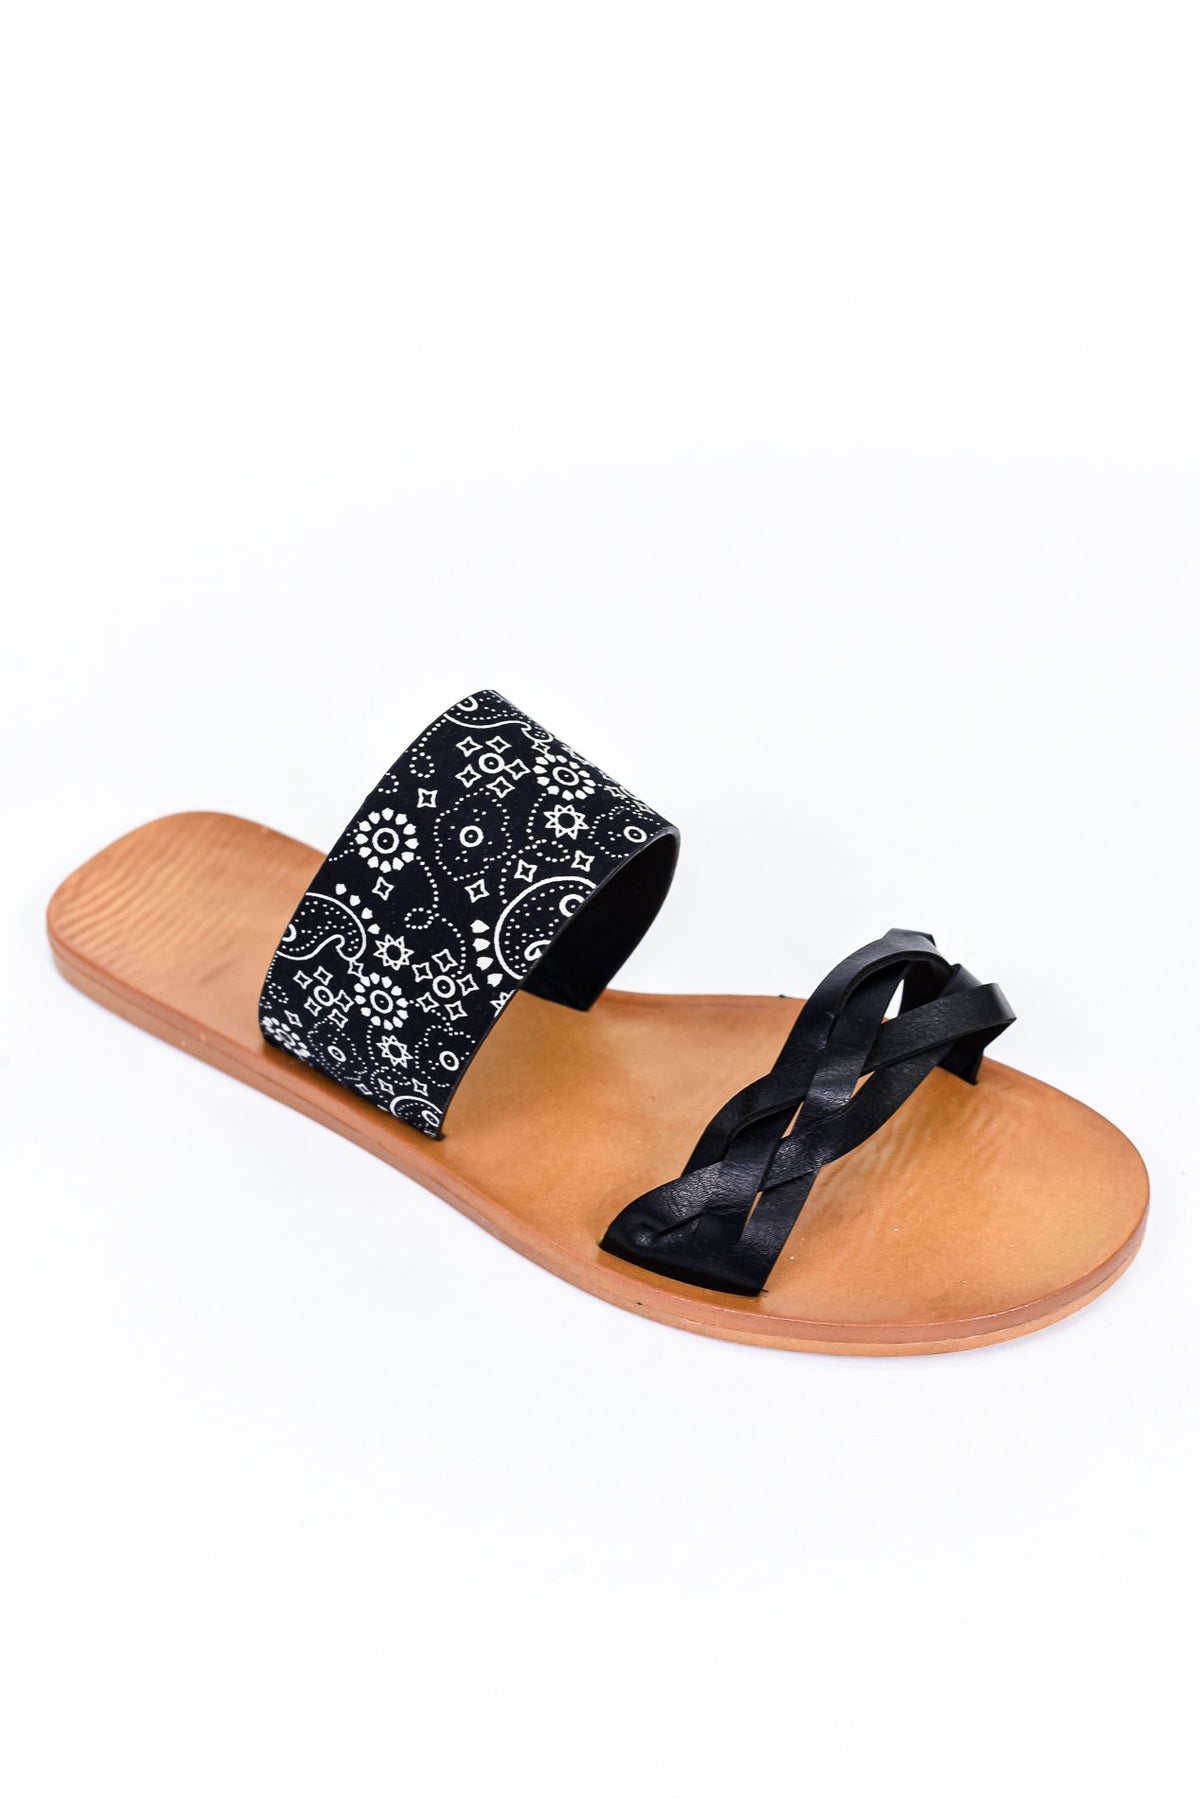 Dangerously Obsessed Black Multi Pattern Sandals - SHO2046BK